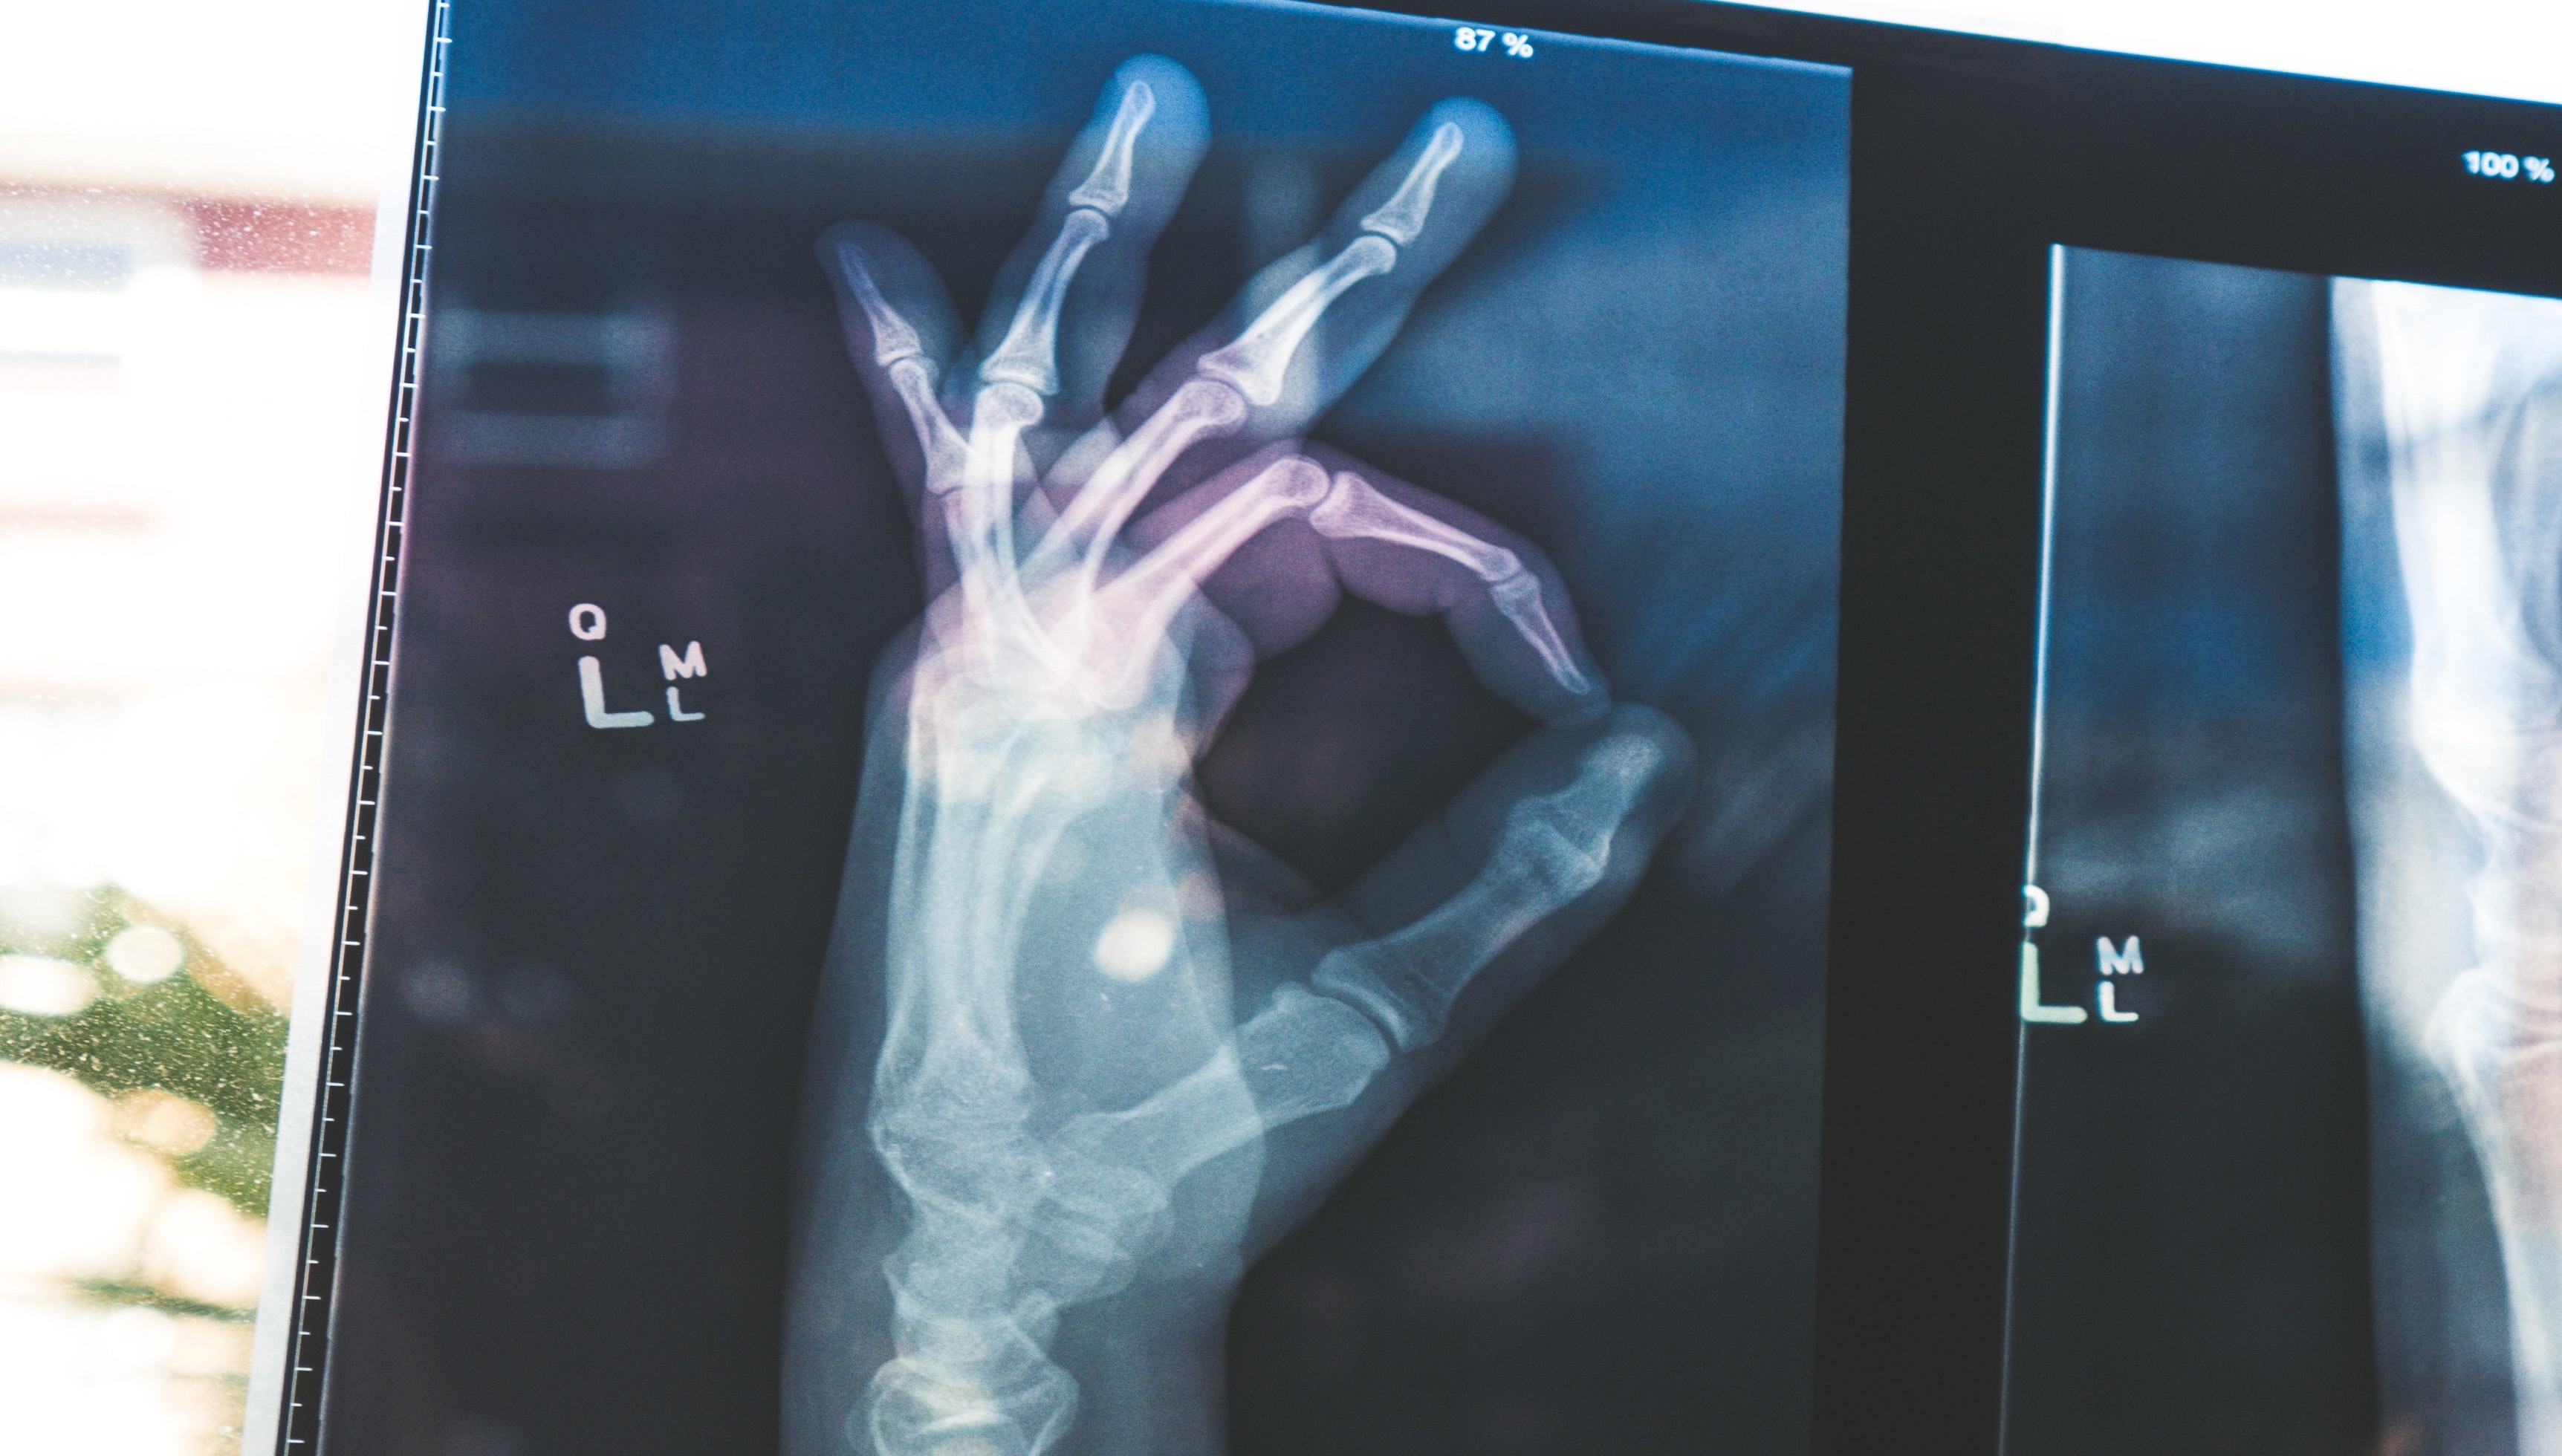 OK sign shot in a X-ray machine. (photo credit @owenbeard)